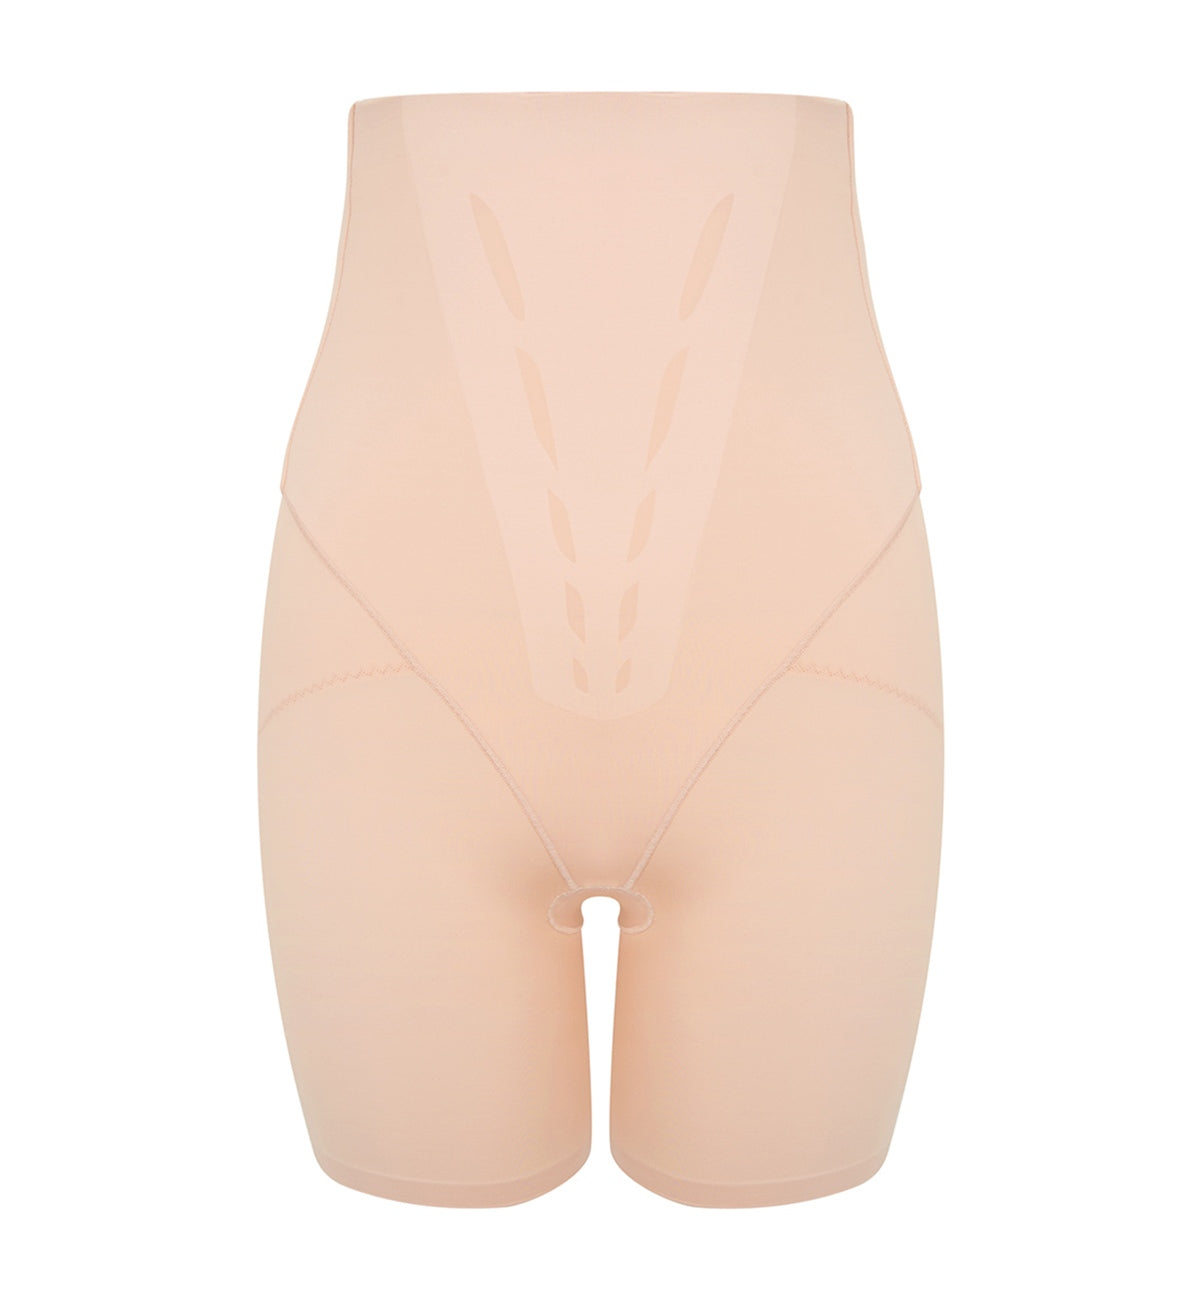 Fashion 3PCs Tummy Control Cotton Seamless Highwaist Panties(Hips  36-44inch) @ Best Price Online